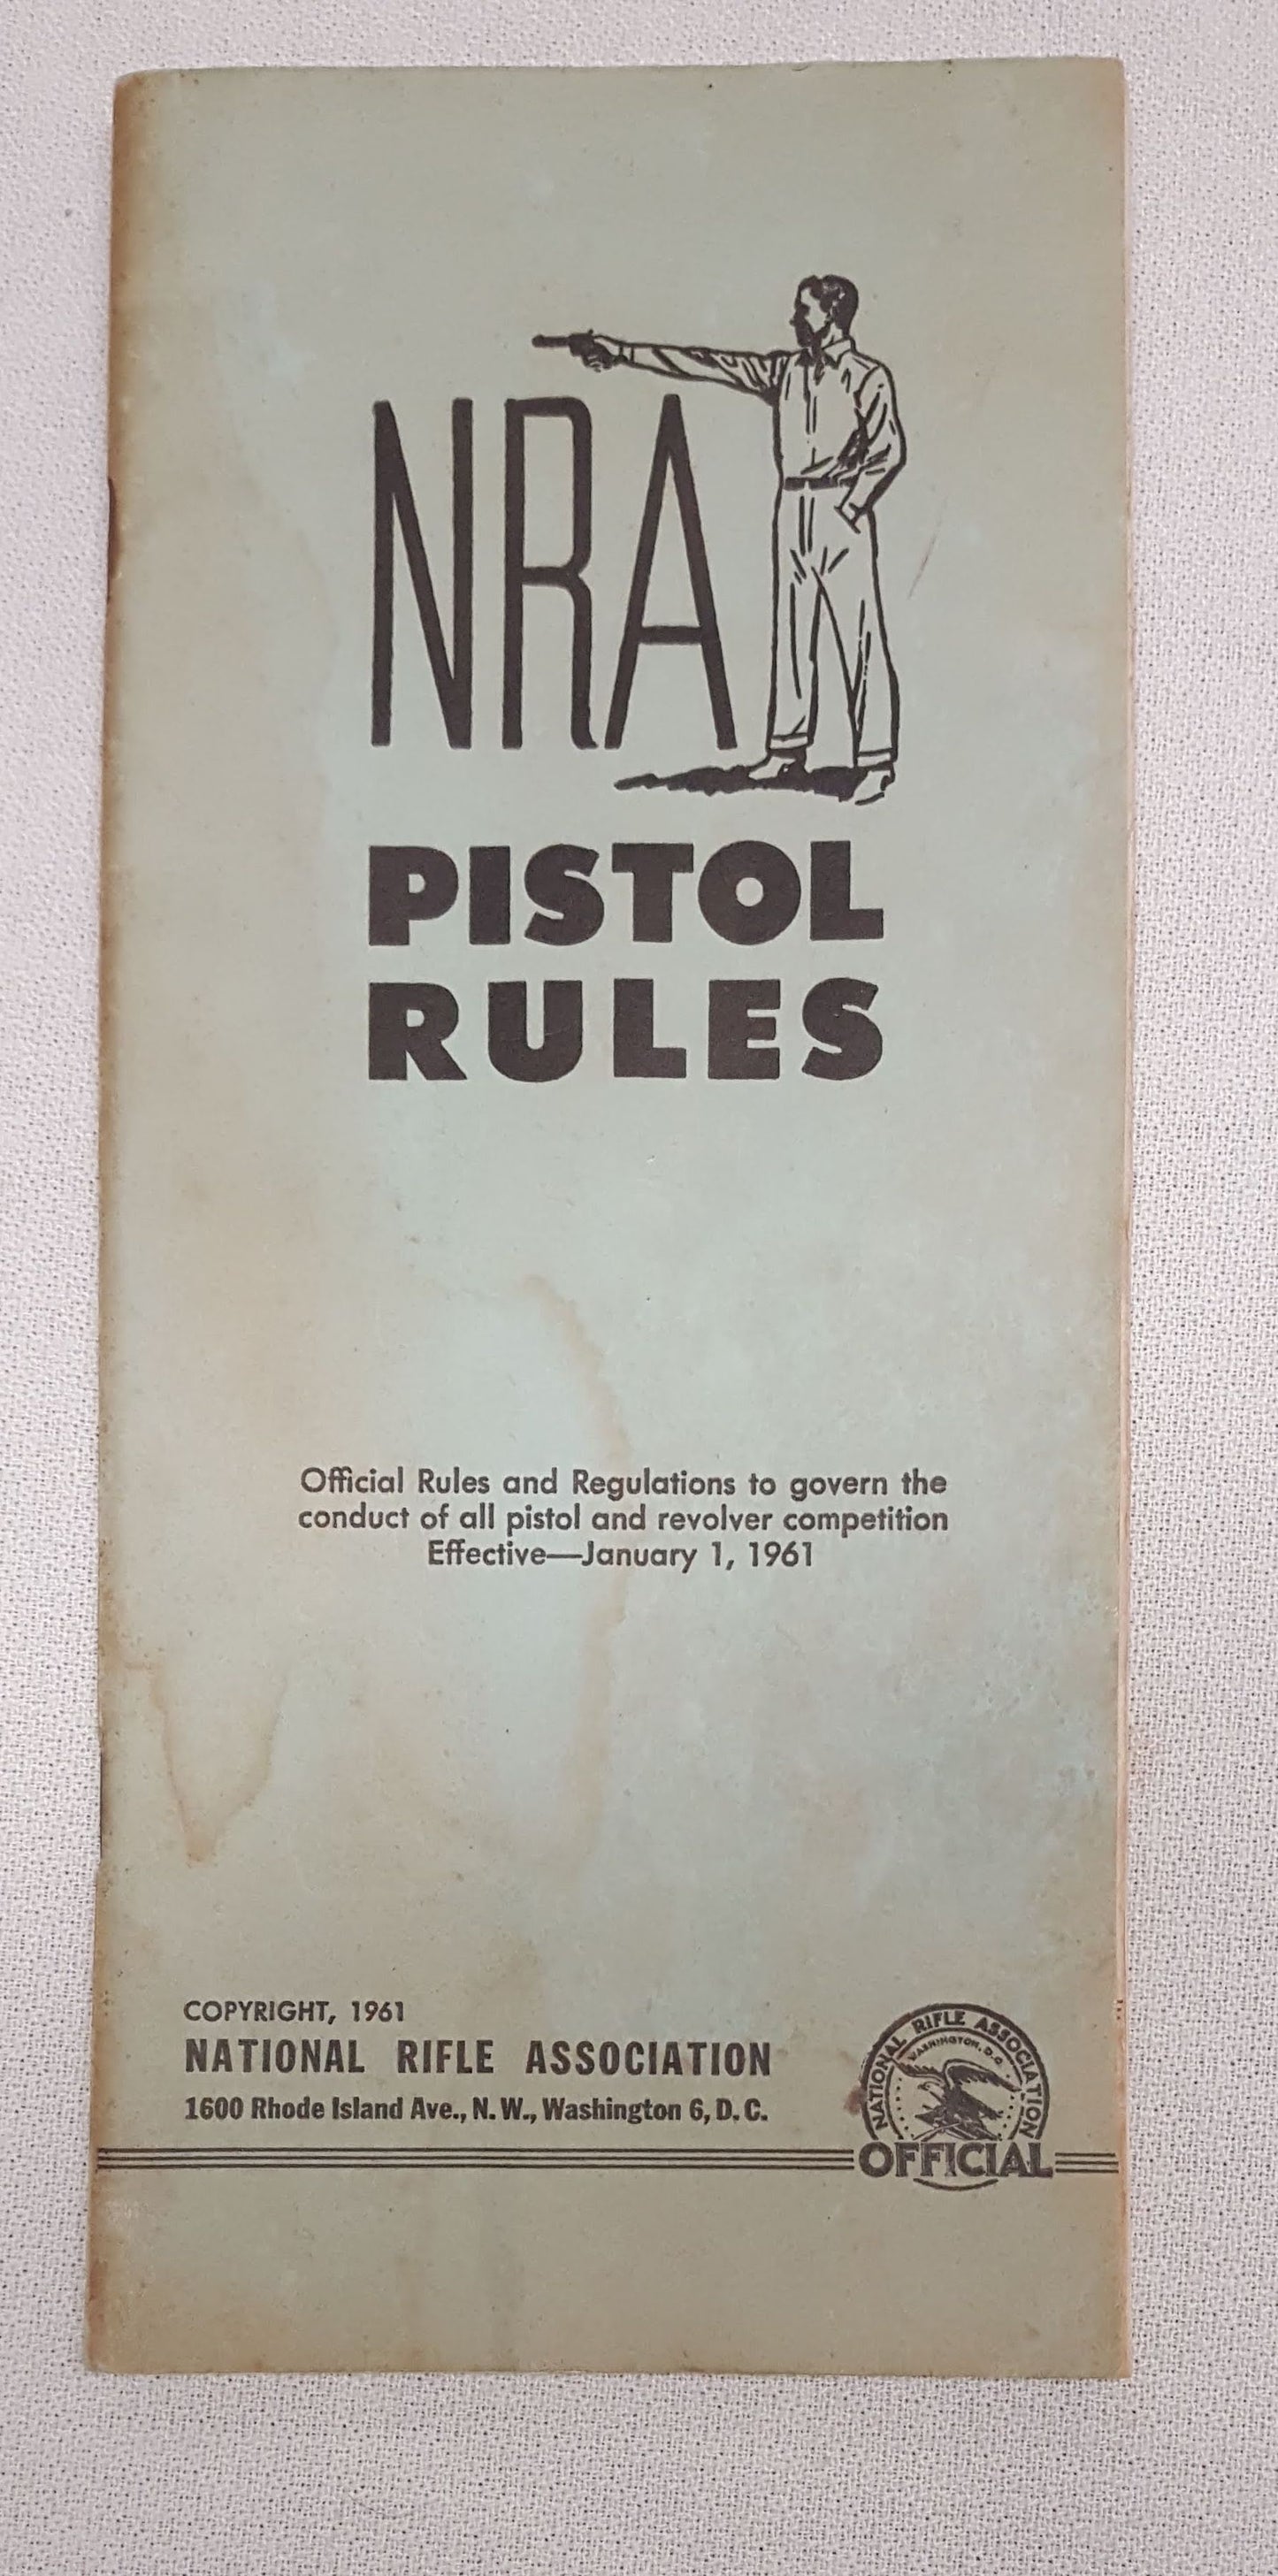 01 01 1961 NRA Pistol Rules SM002